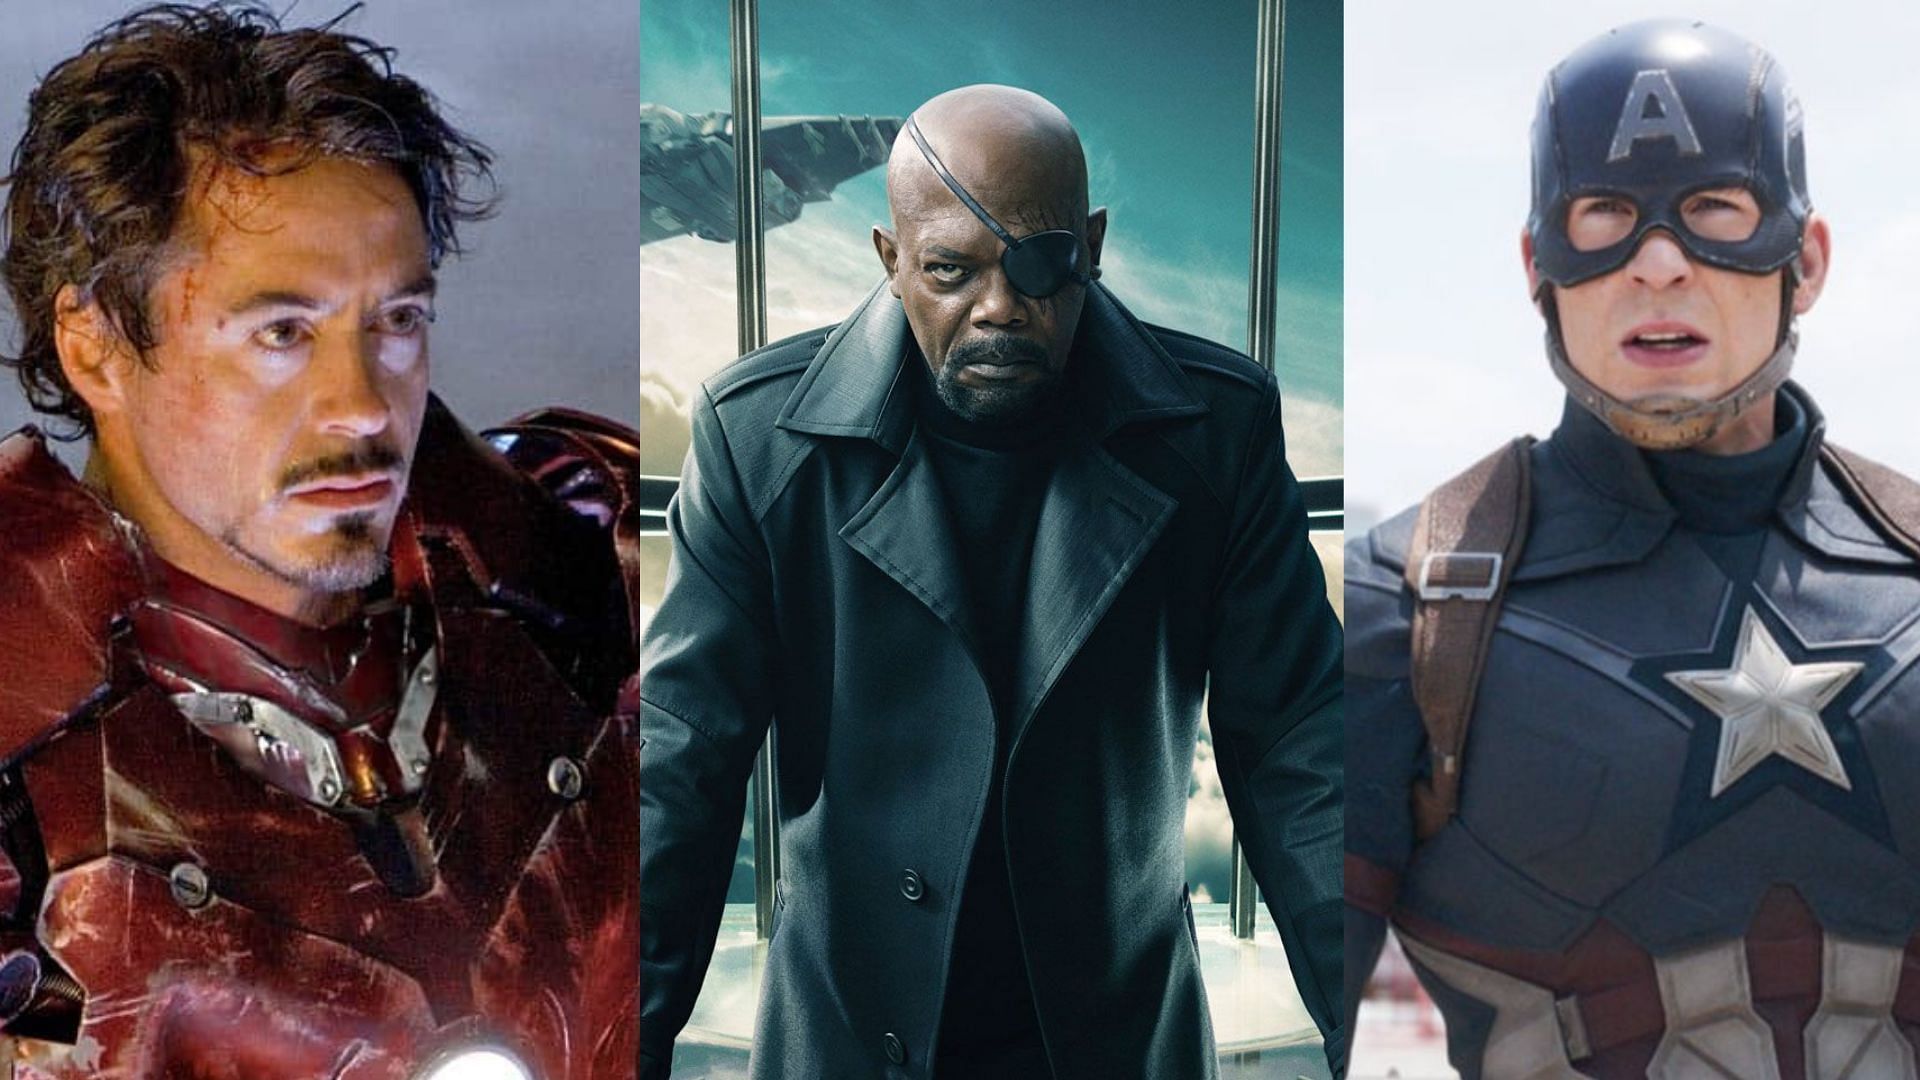 Tony Stark/Iron Man, Nick Fury and Steve Rogers/Captain America (images via Marvel Studios)